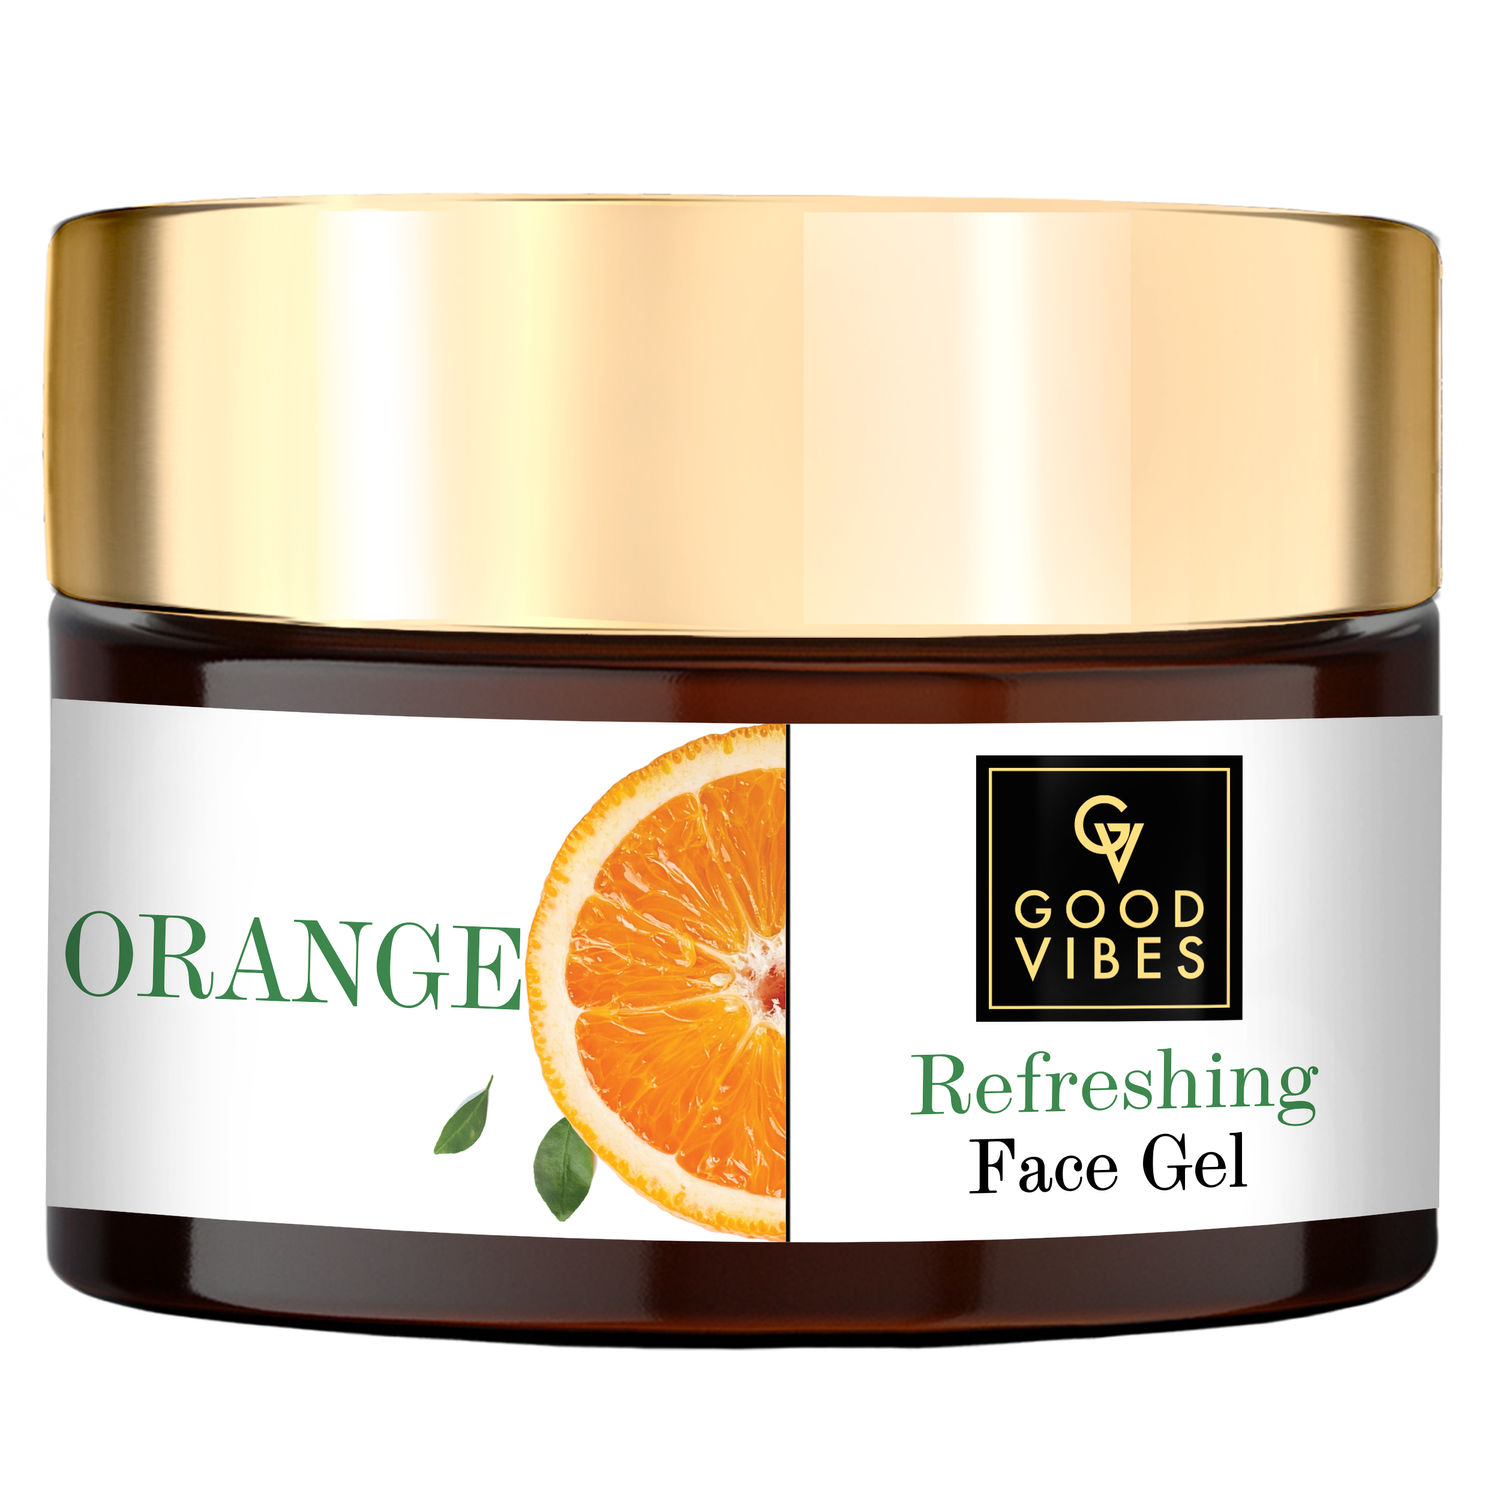 Good Vibes Orange Refreshing Face Gel | Anti-Ageing, Hydrating | With Papaya | No Parabens, No Sulphates, No Mineral Oil, No Animal Testing (50 g)